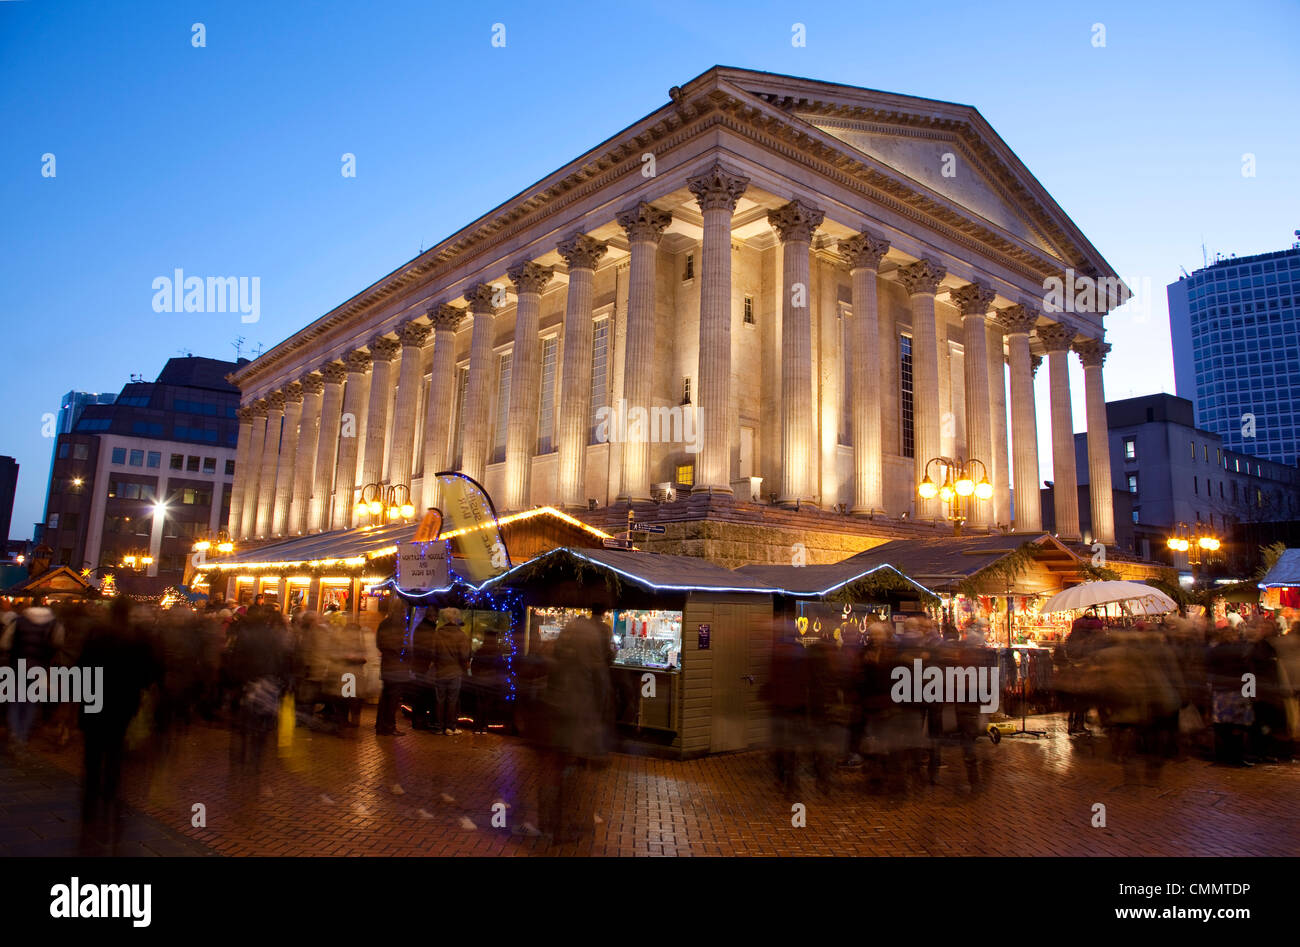 Christmas Market stalls and Town Hall, City Centre, Birmingham, West Midlands, England, United Kingdom, Europe Stock Photo